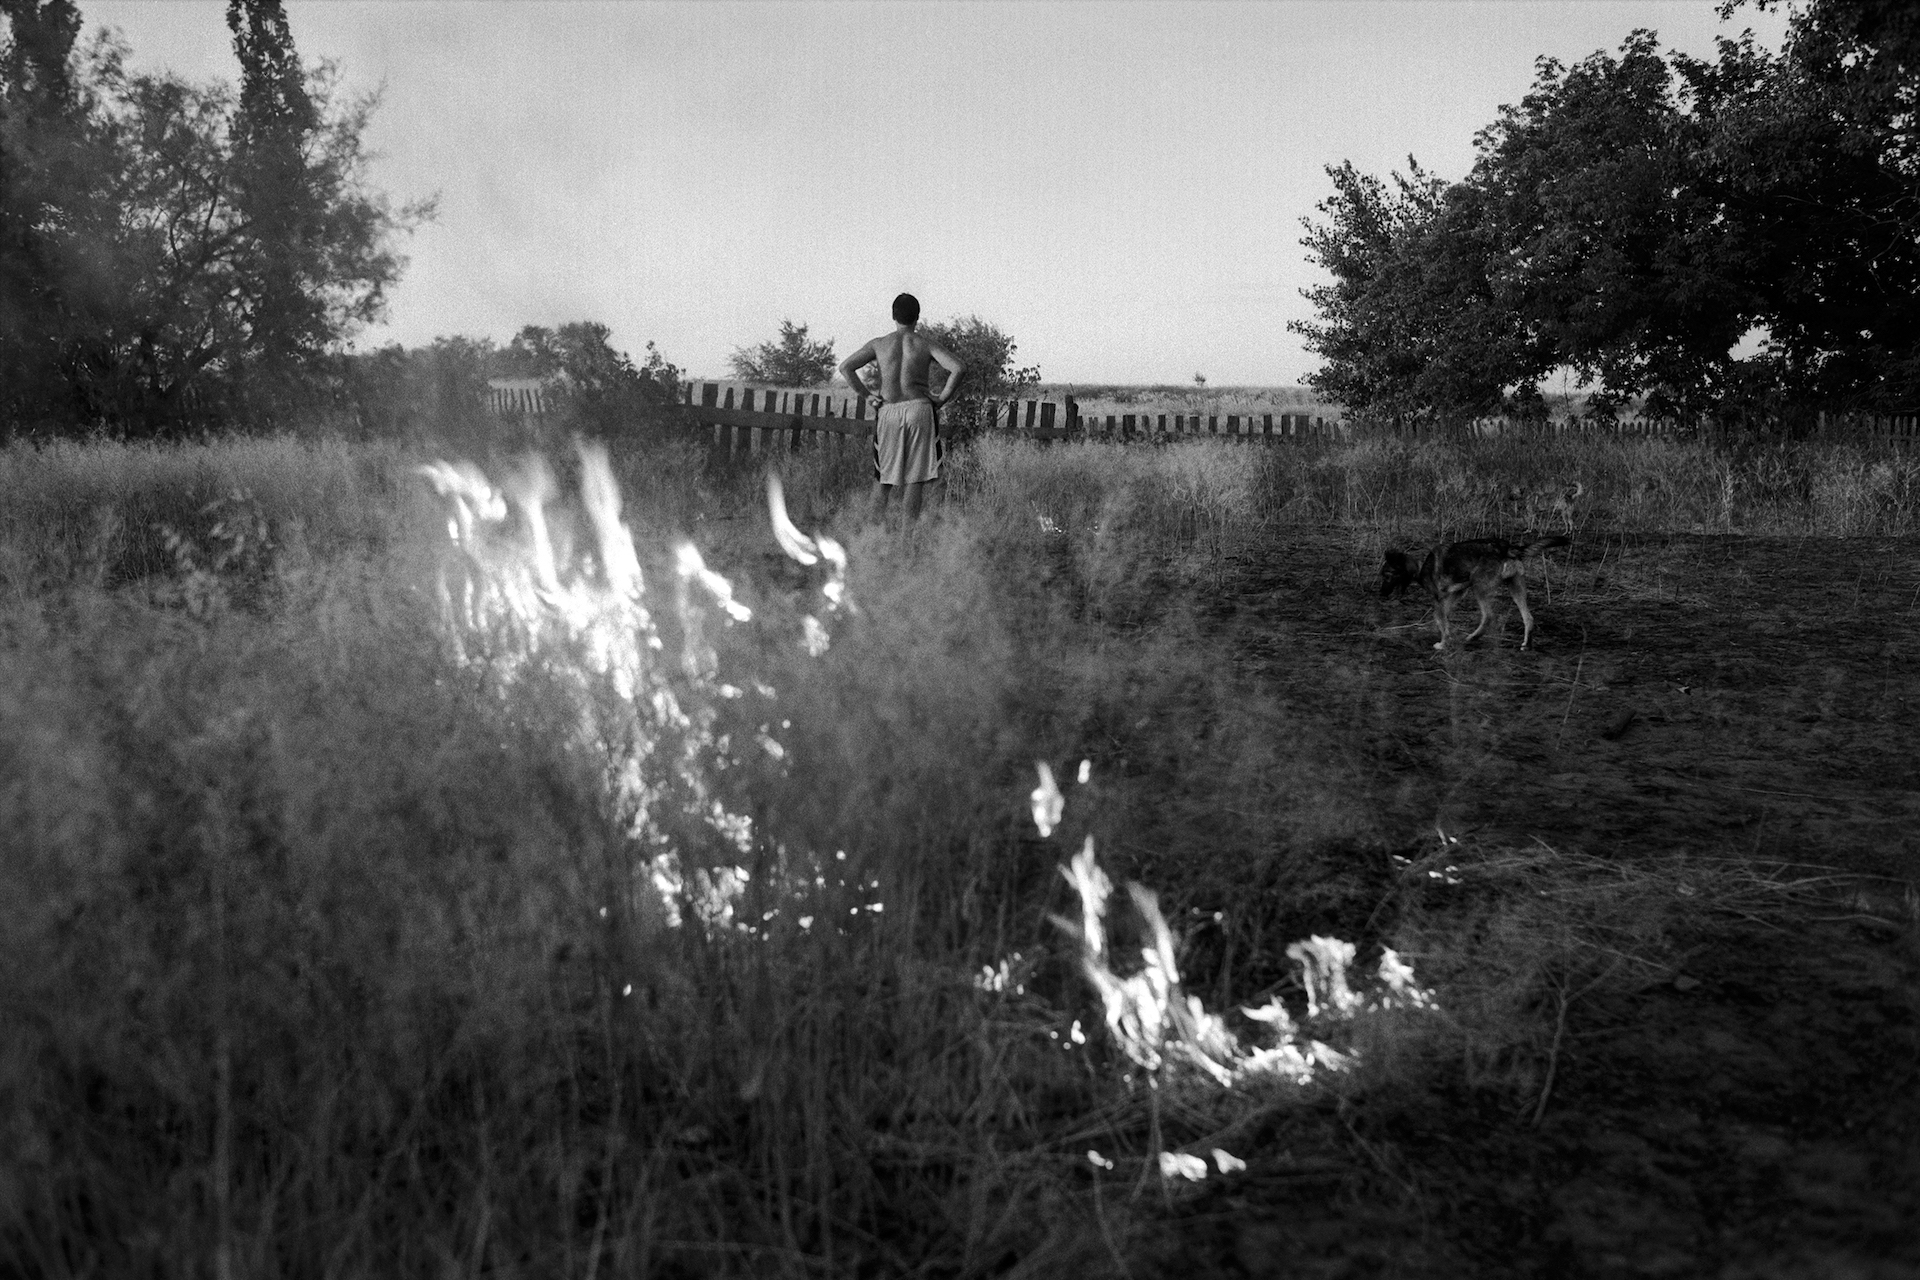 Burning old grass, village of Oblivskaya district, Rostov-on-Don region, Russia (2010)